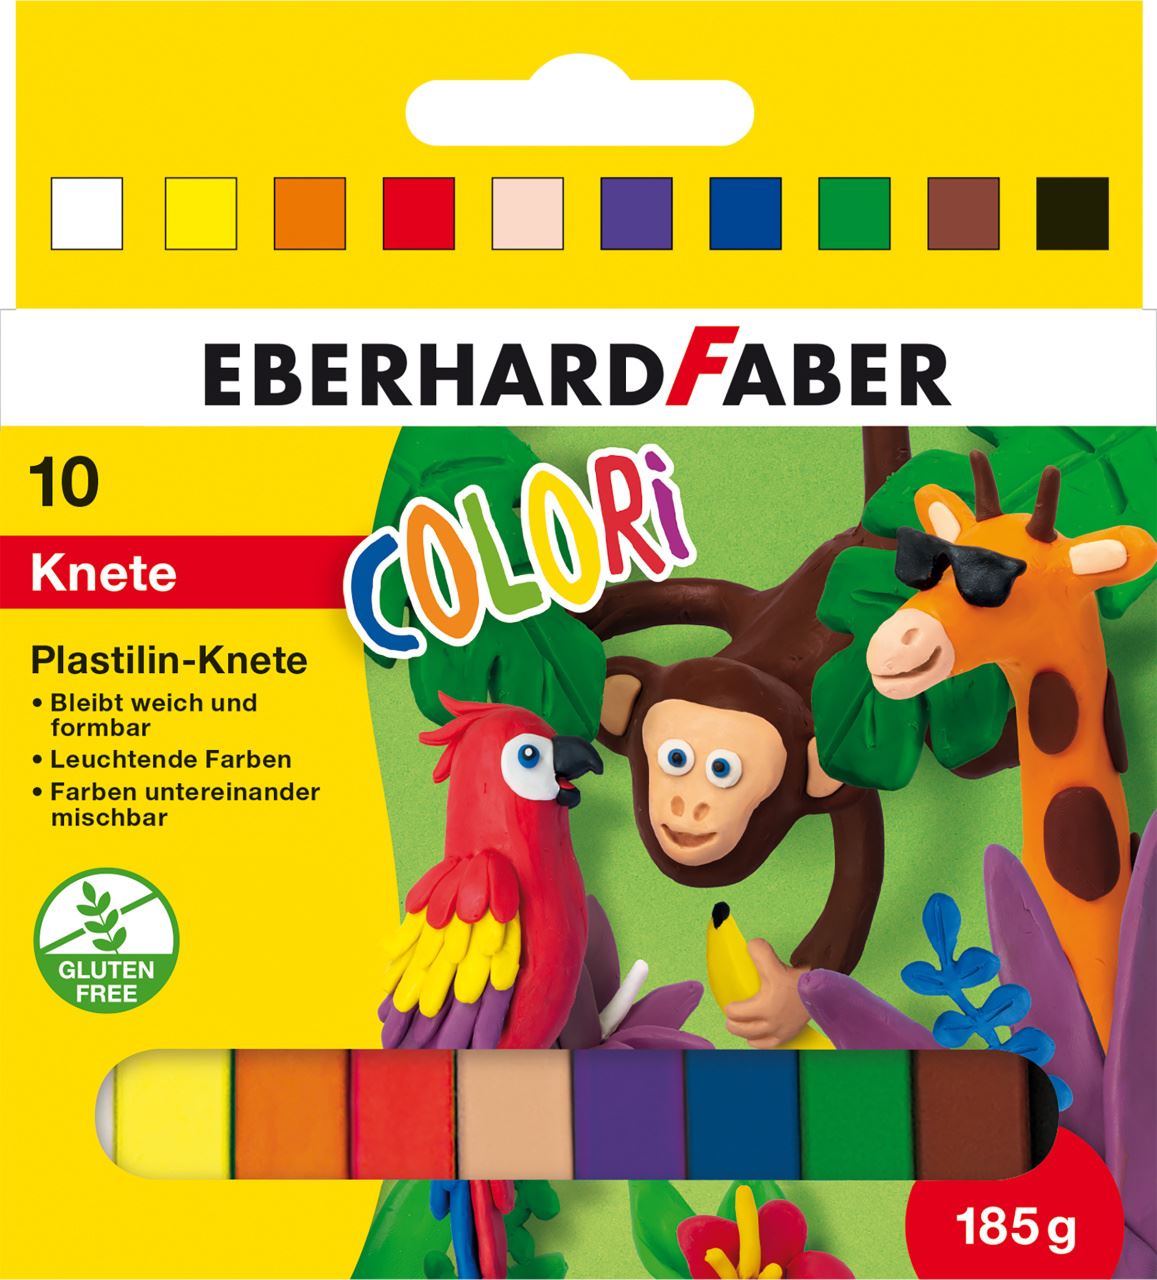 Eberhard-Faber - Colori modelling clay cardboard box of 10